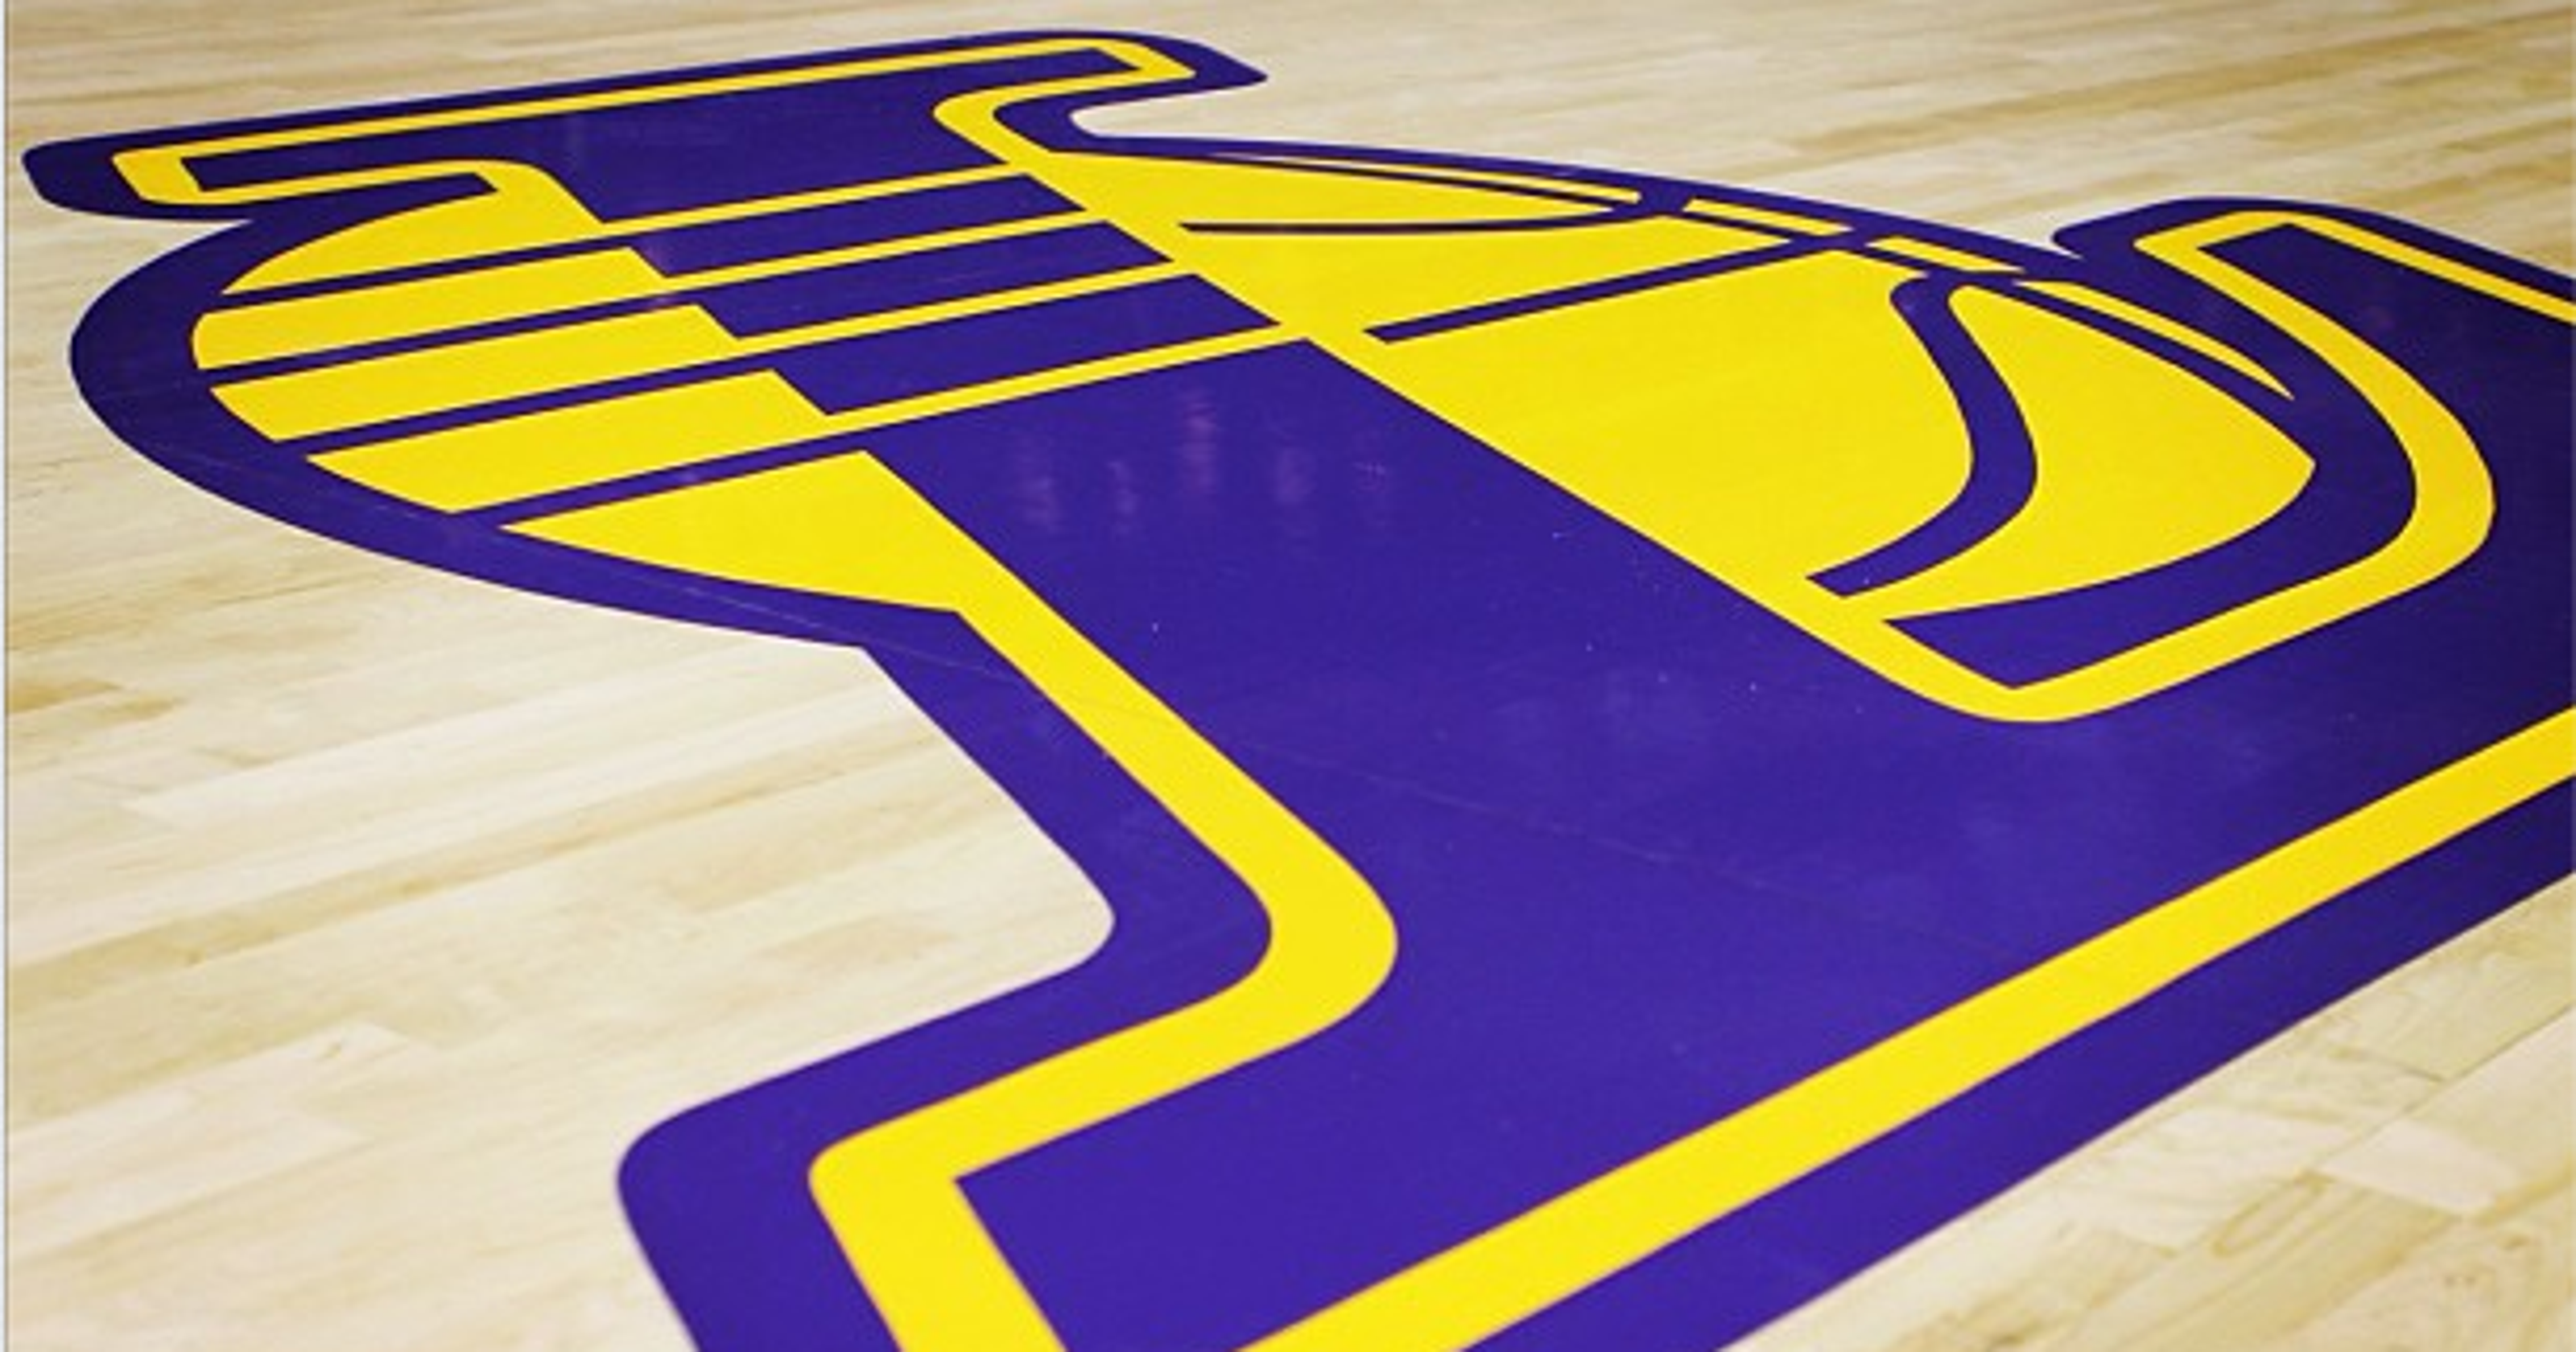 Lakers #39 Staples Center floor celebrates 16 championships